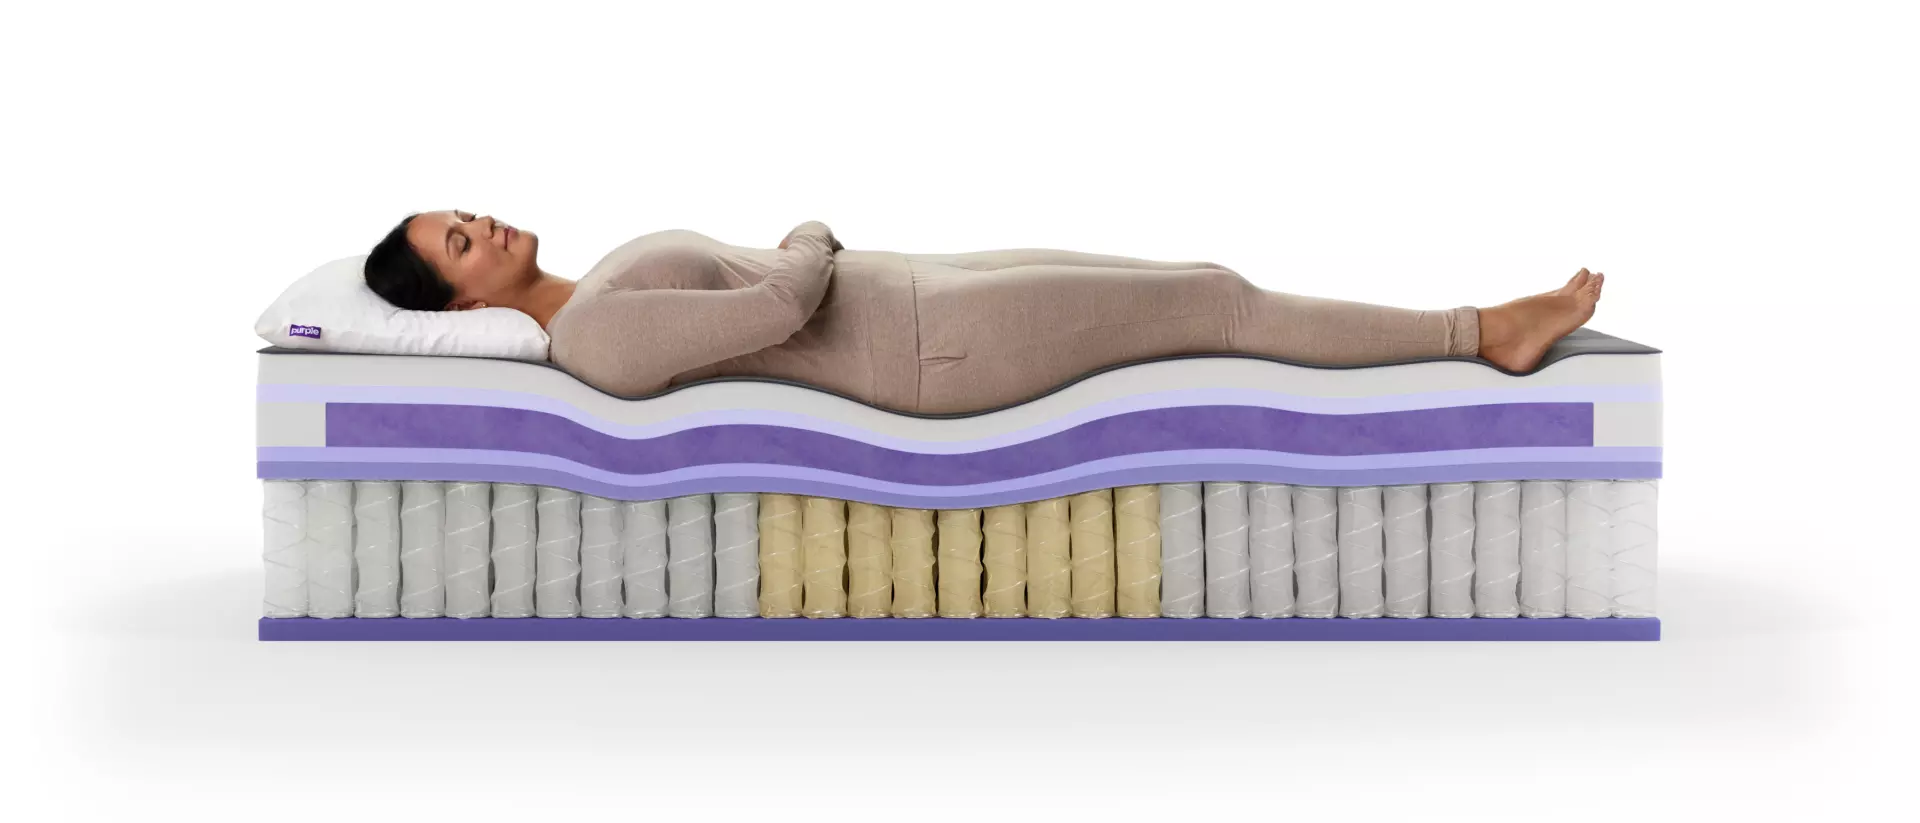 A woman sleeping on Purple RejuvenatePlus mattress